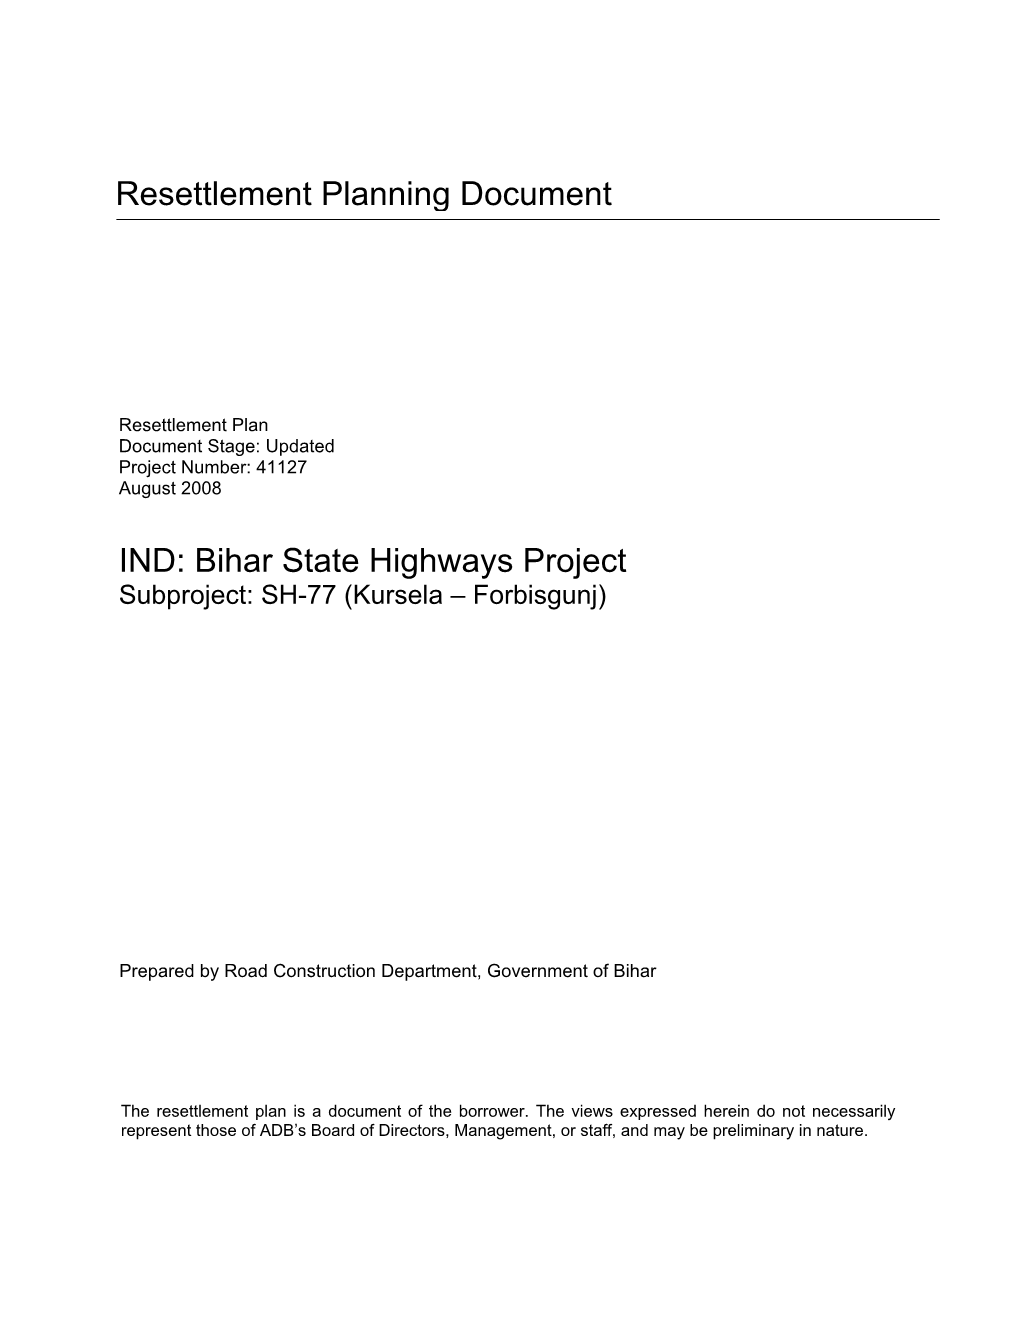 Bihar State Highways Project Subproject: SH-77 (Kursela – Forbisgunj)